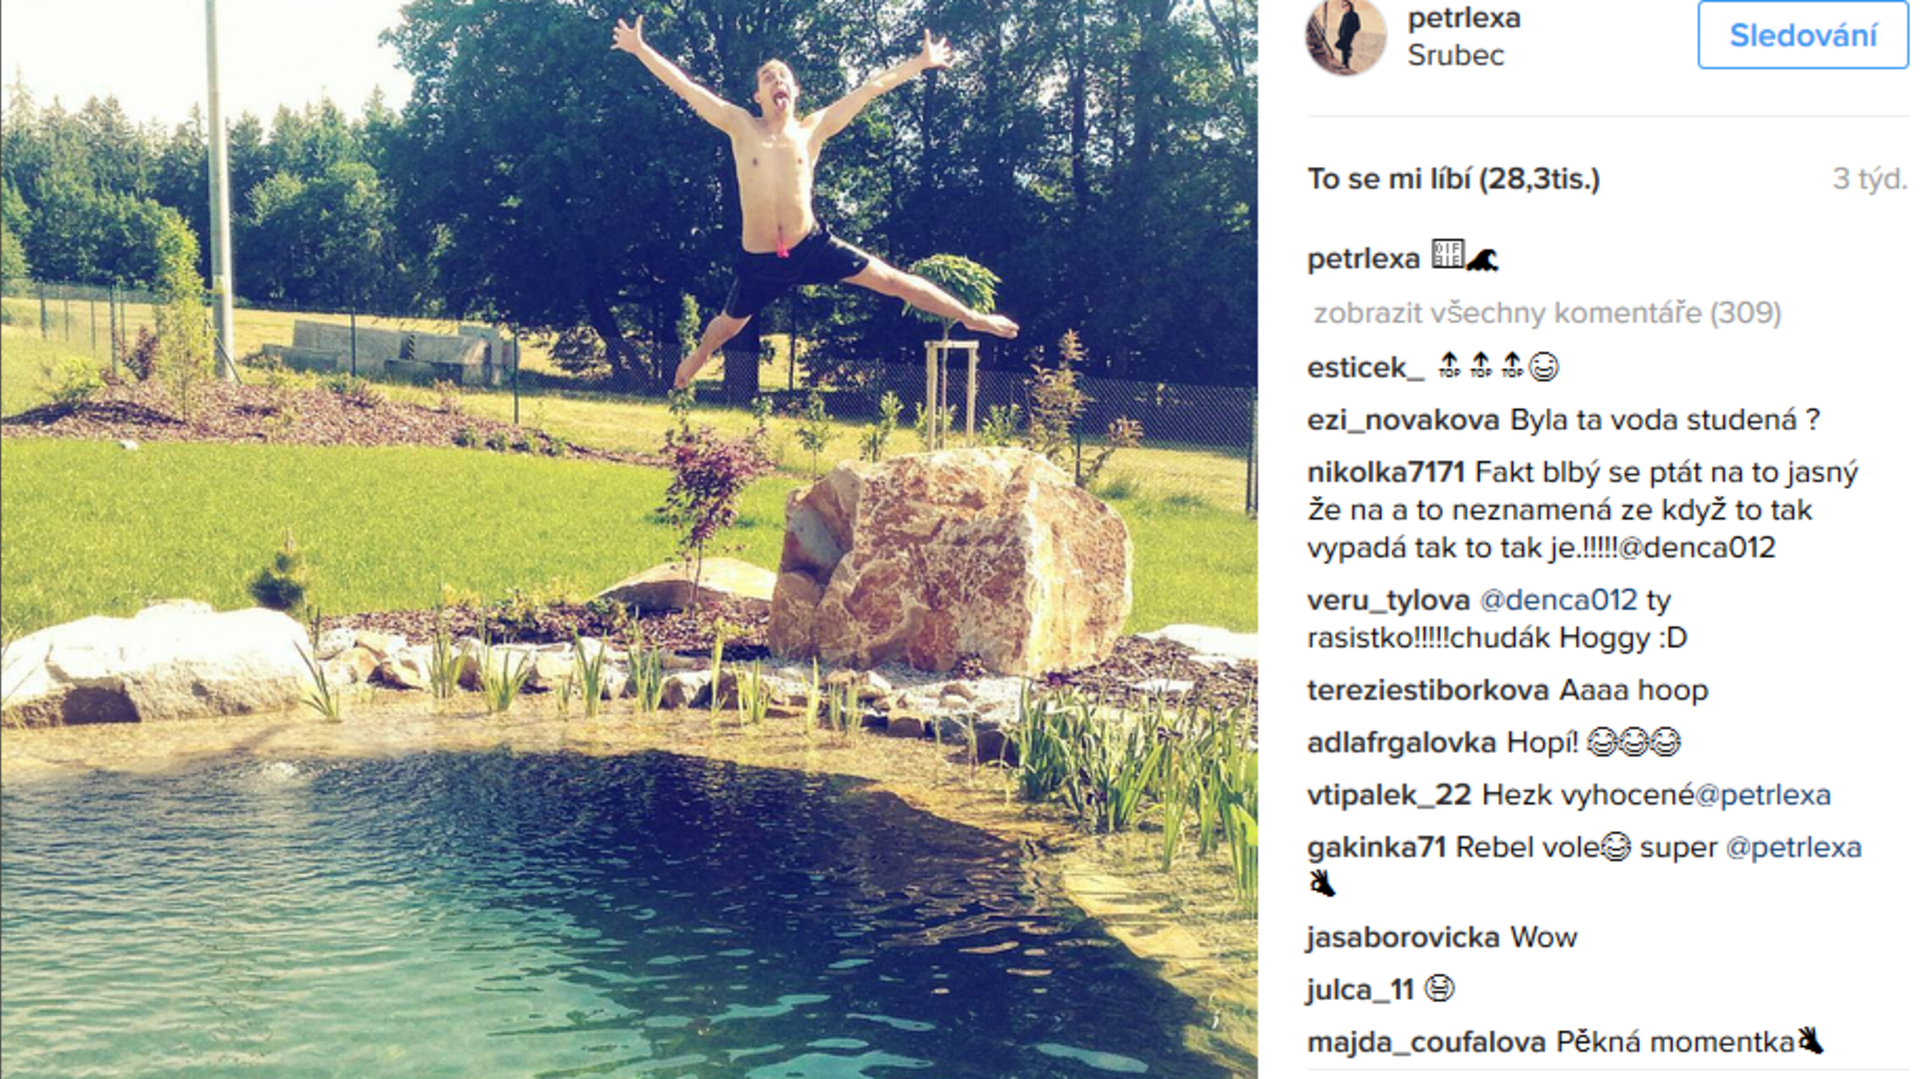 Petr Lexa natočil i video, to najdete na jeho Instagramu